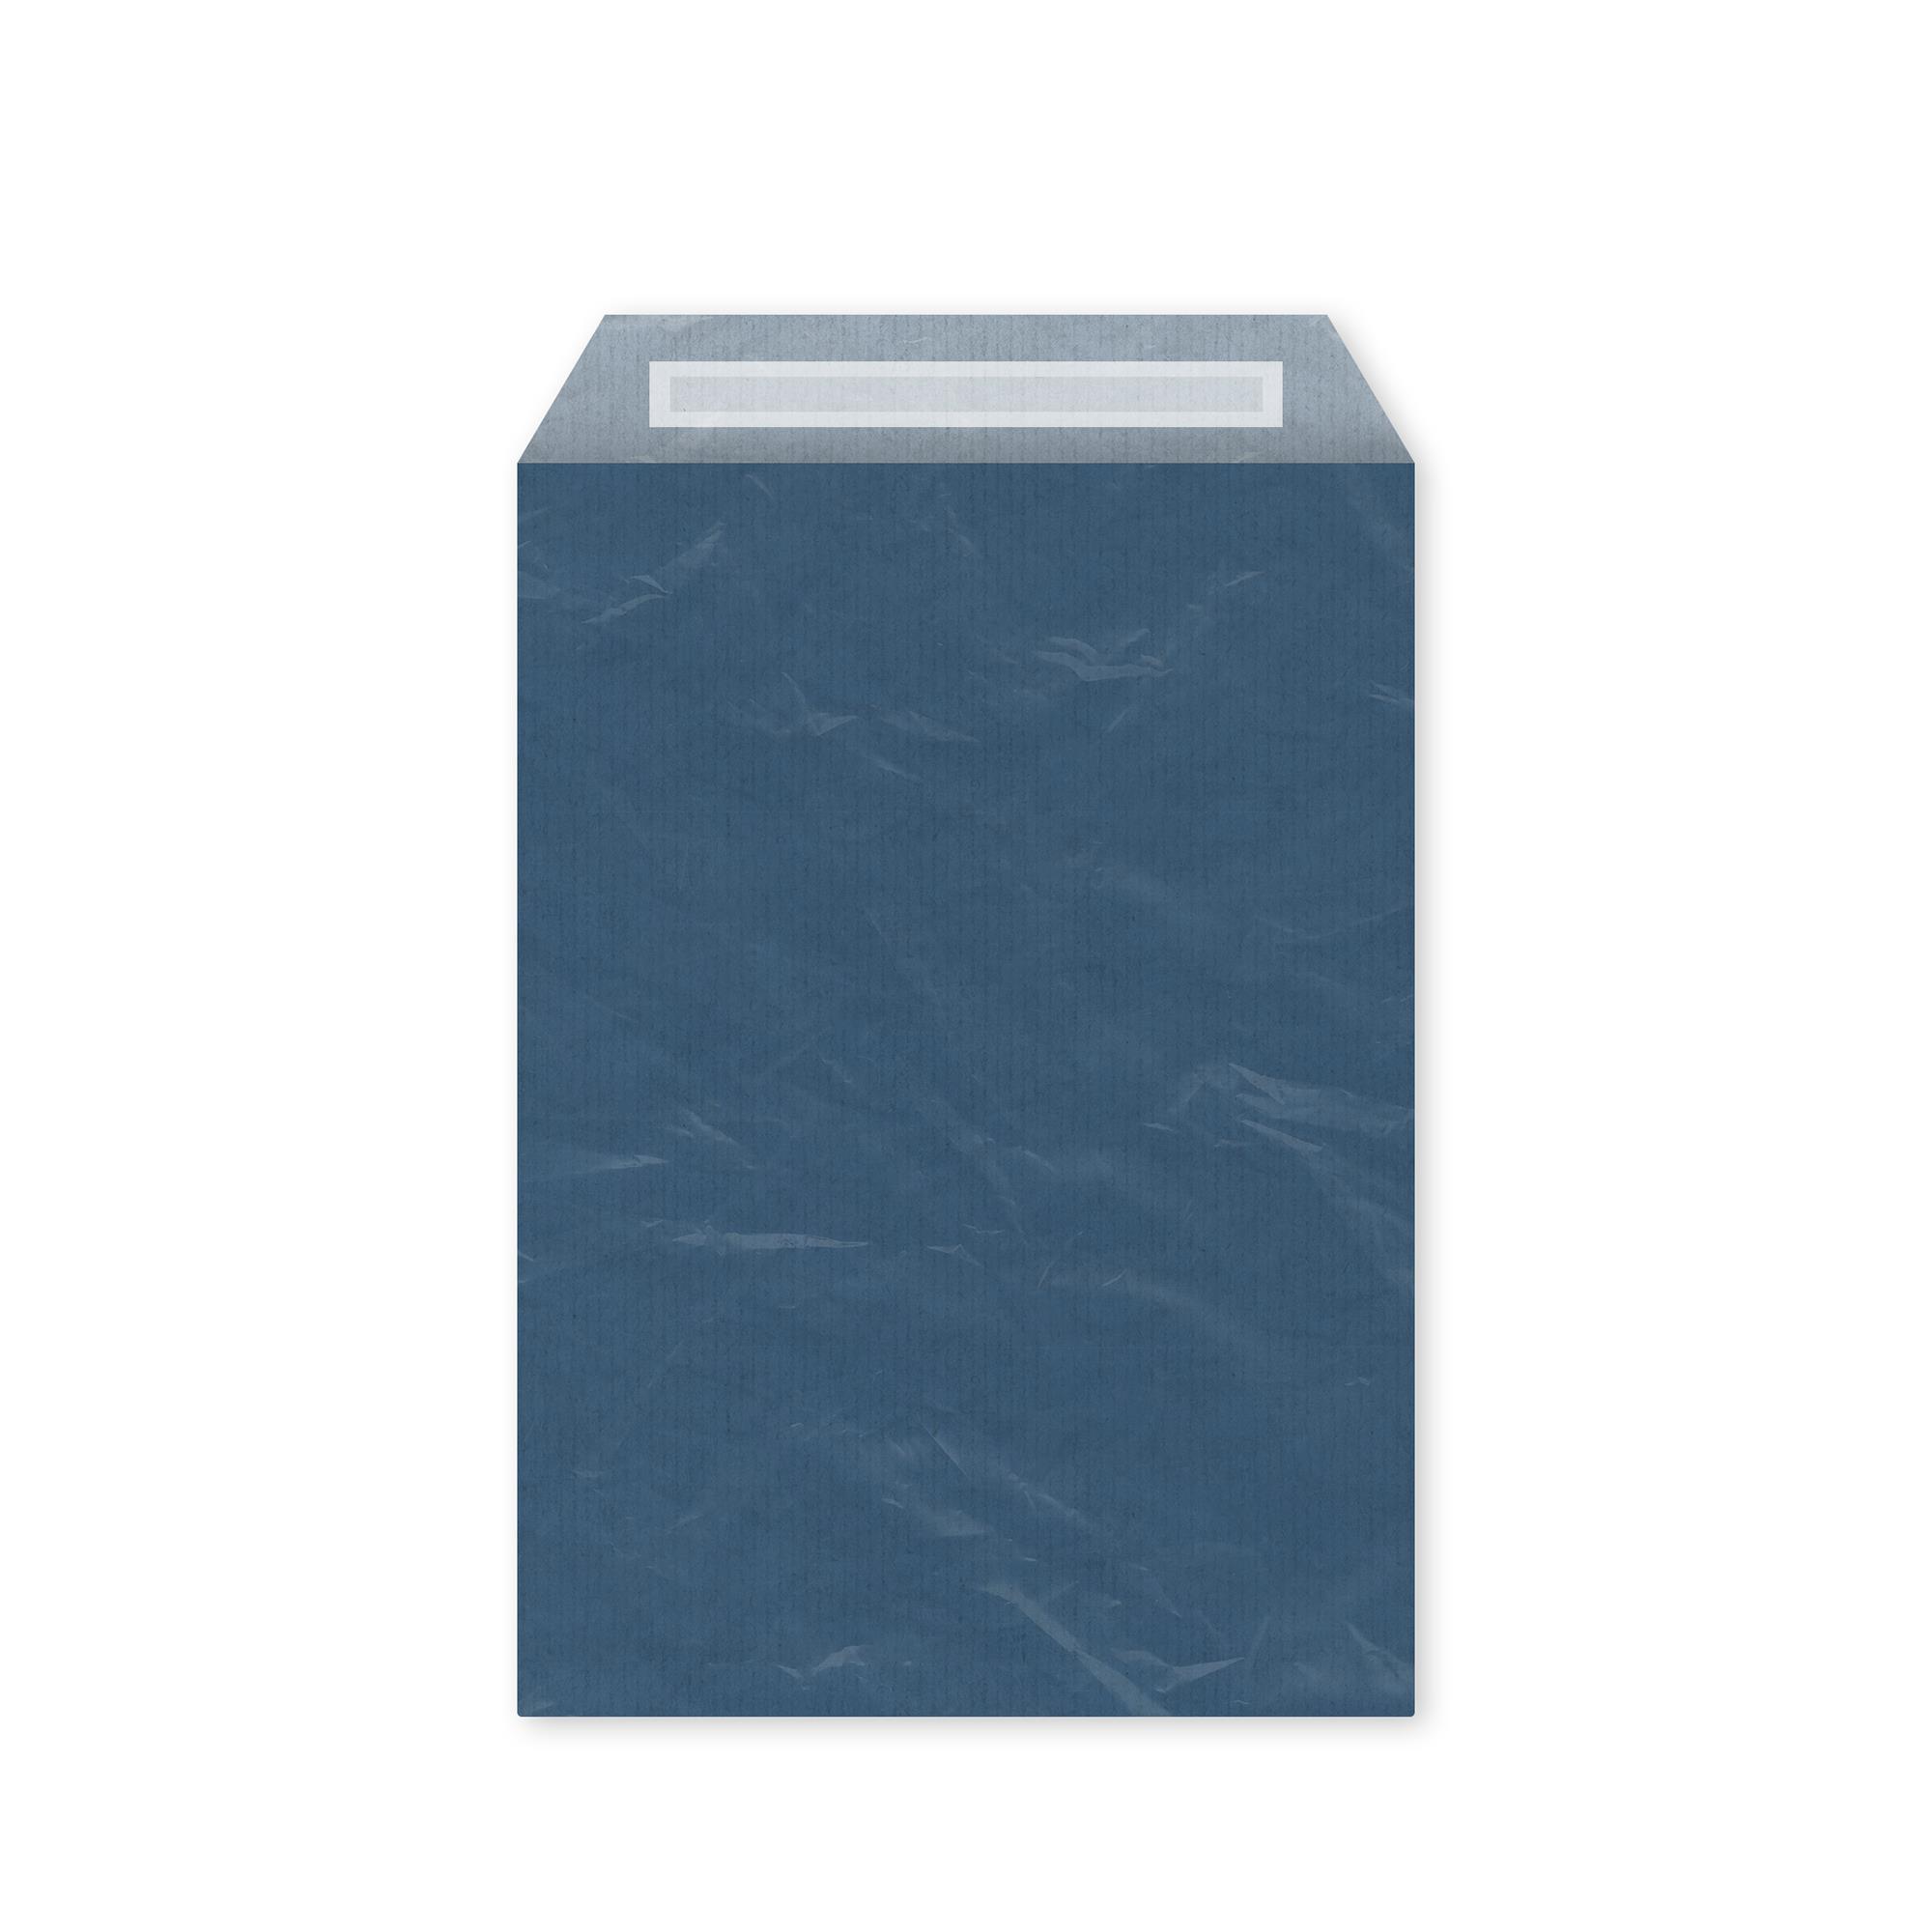 Bantlı Hediye Paketi Kağıt Mavi 25x6x30,5 cm - 25 Adet